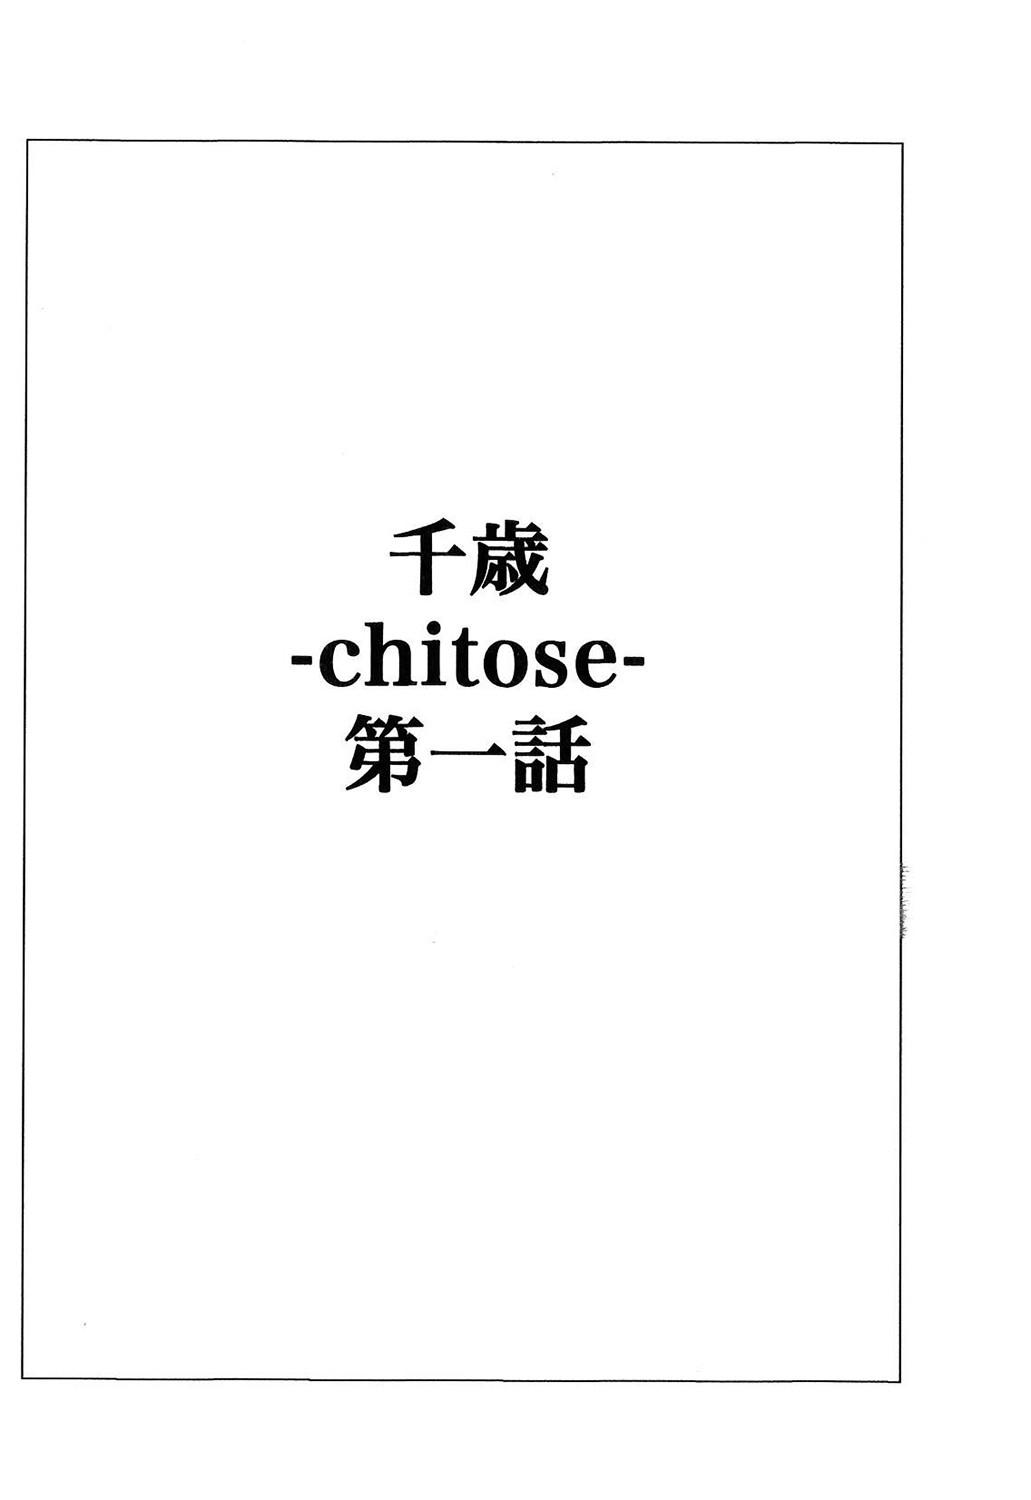 Chitose 220